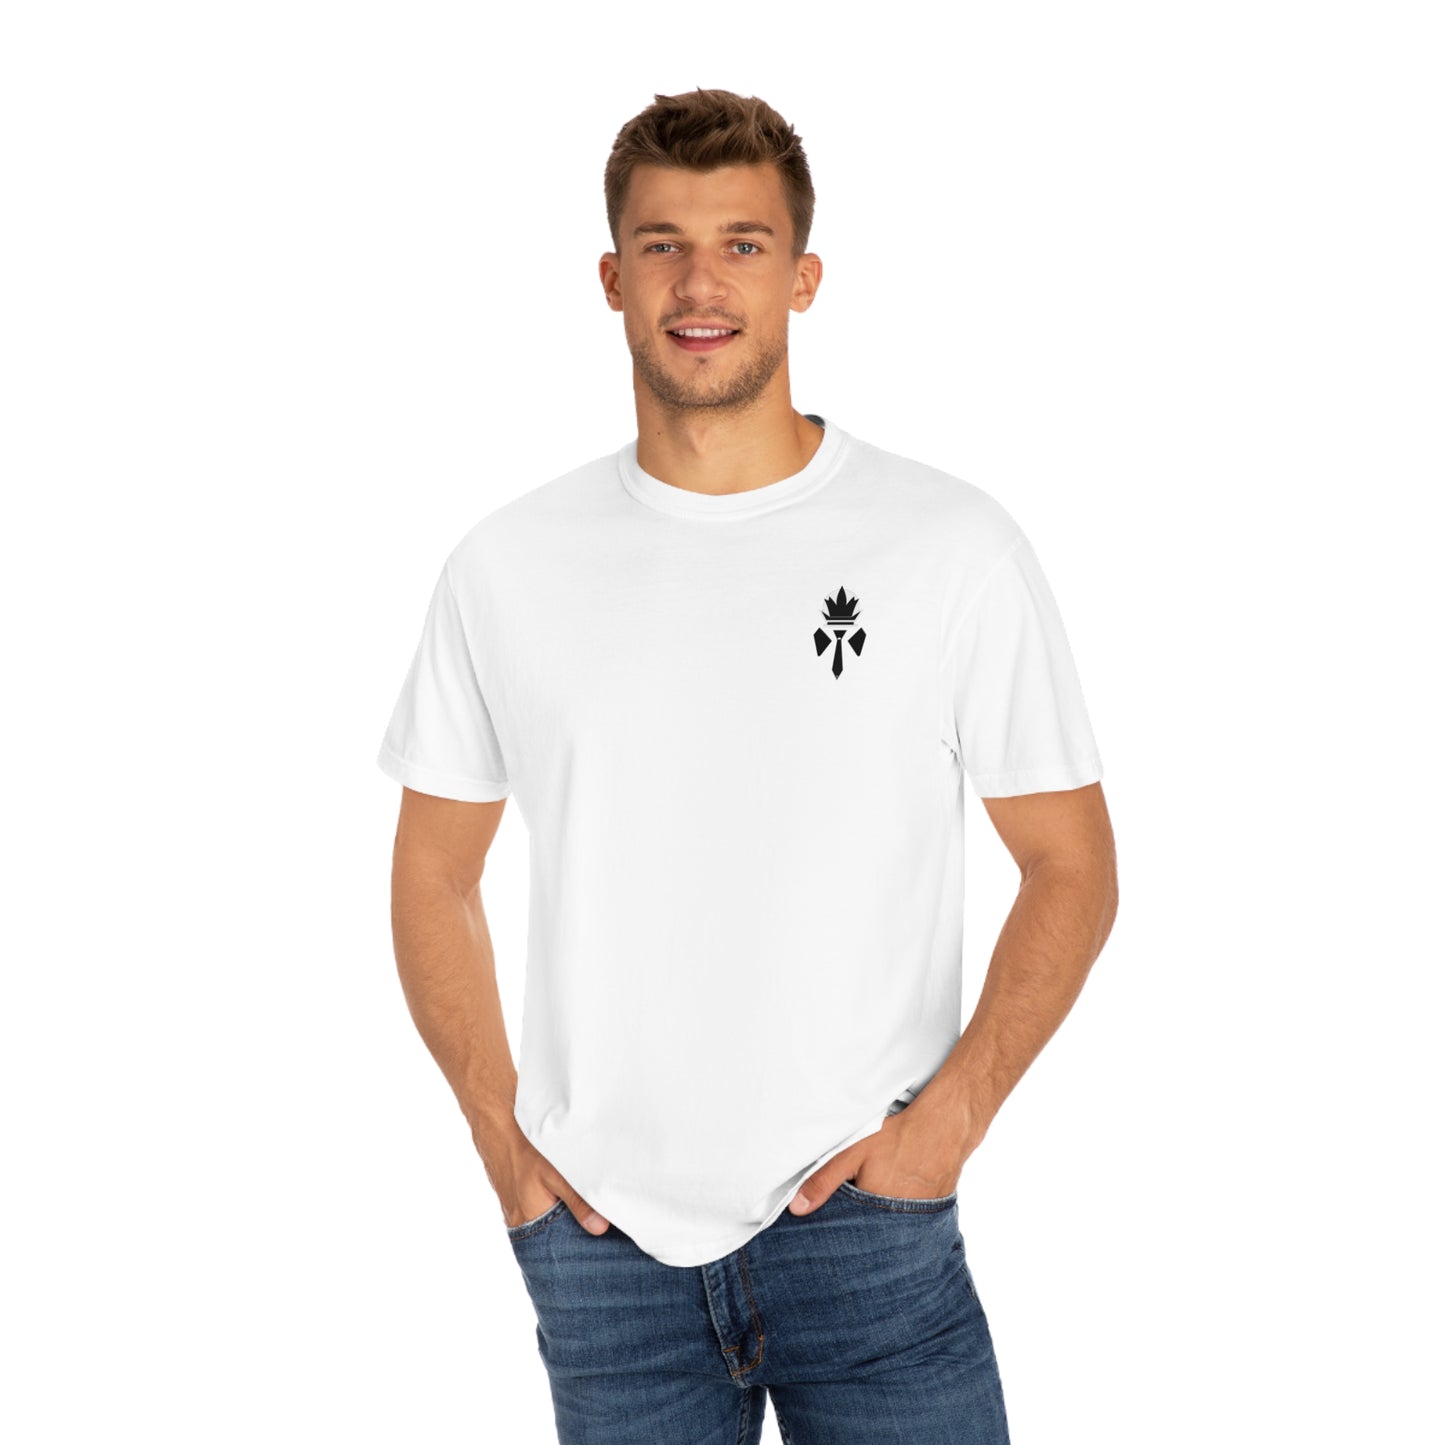 LiterallyUs Unisex Garment-Dyed T-shirt